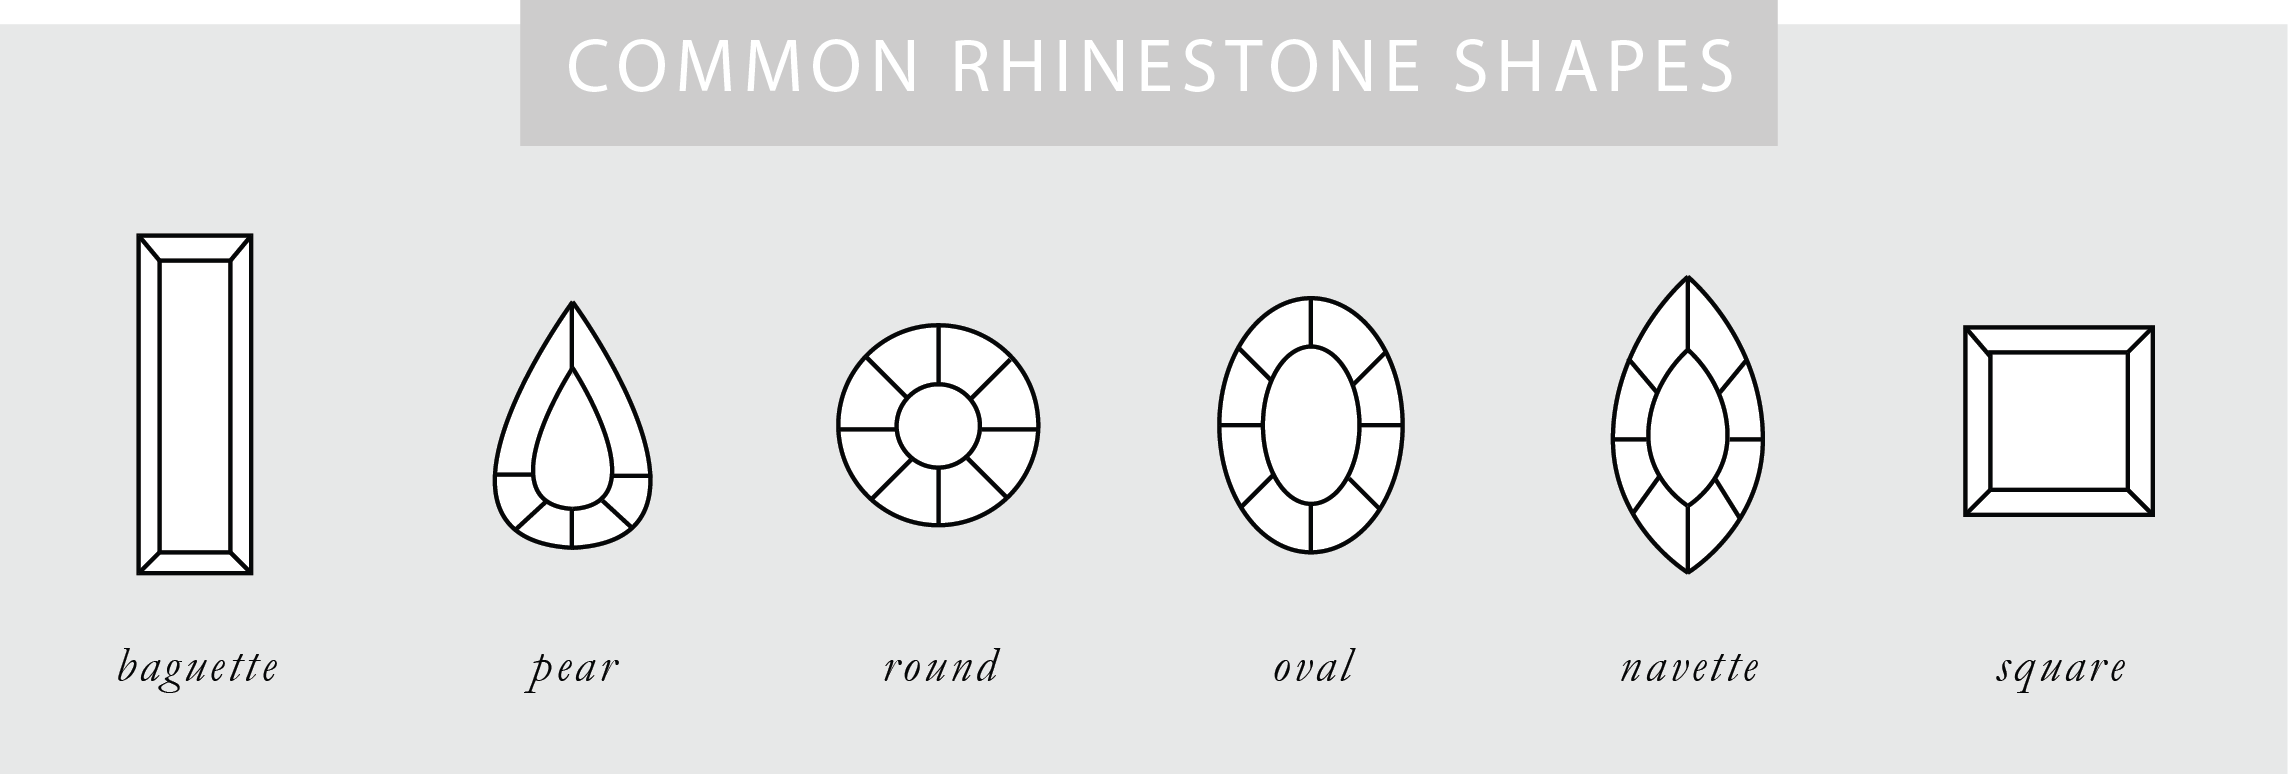 04-common-rhinestone-shapes